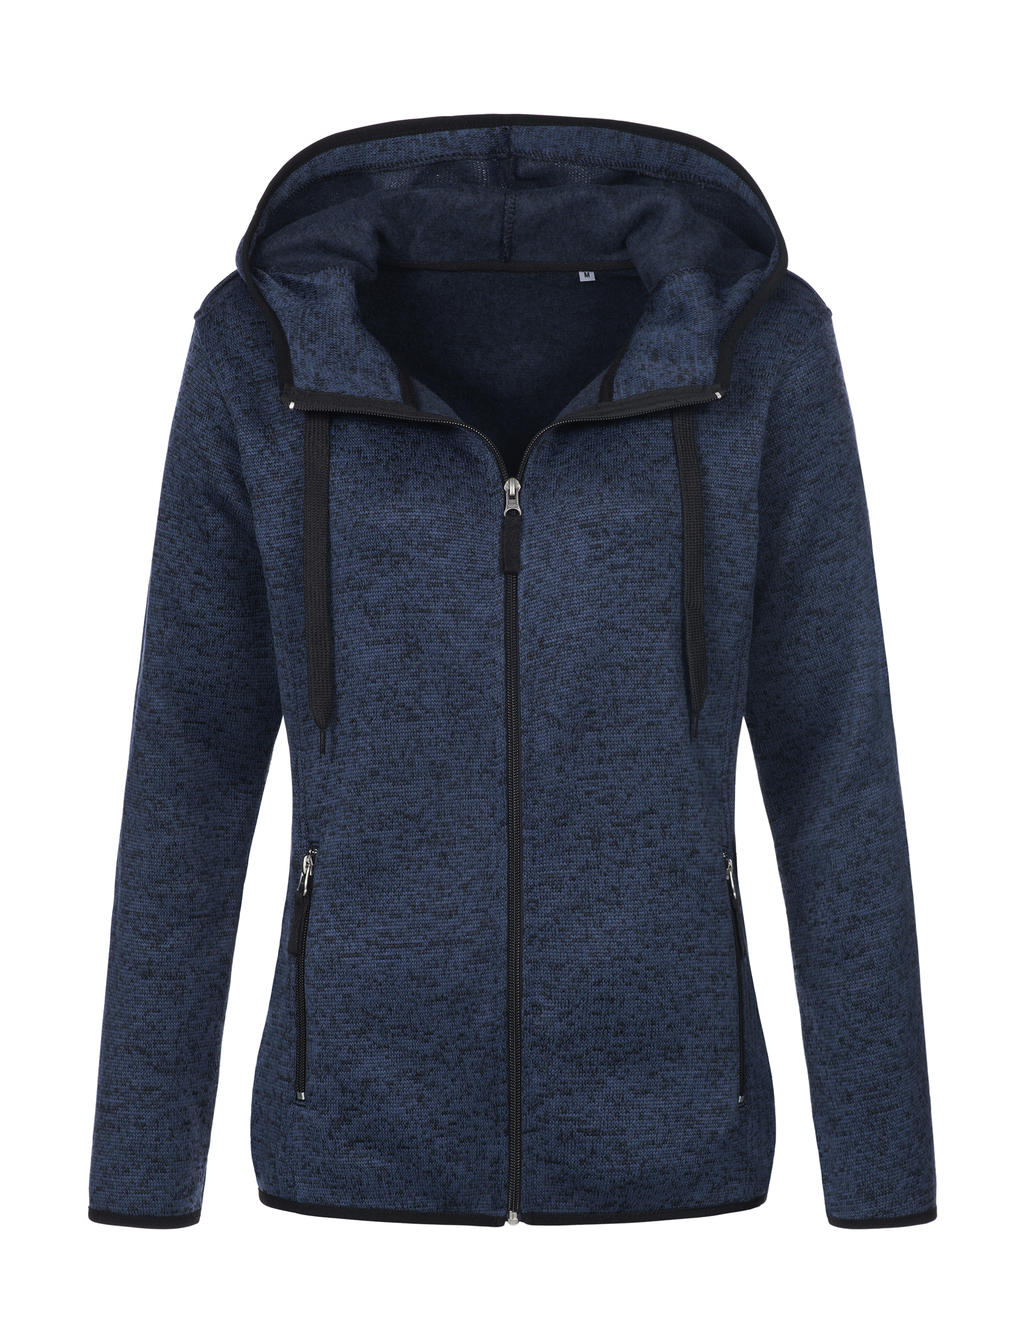 Knit Fleece Jacket Women - marina blue melange